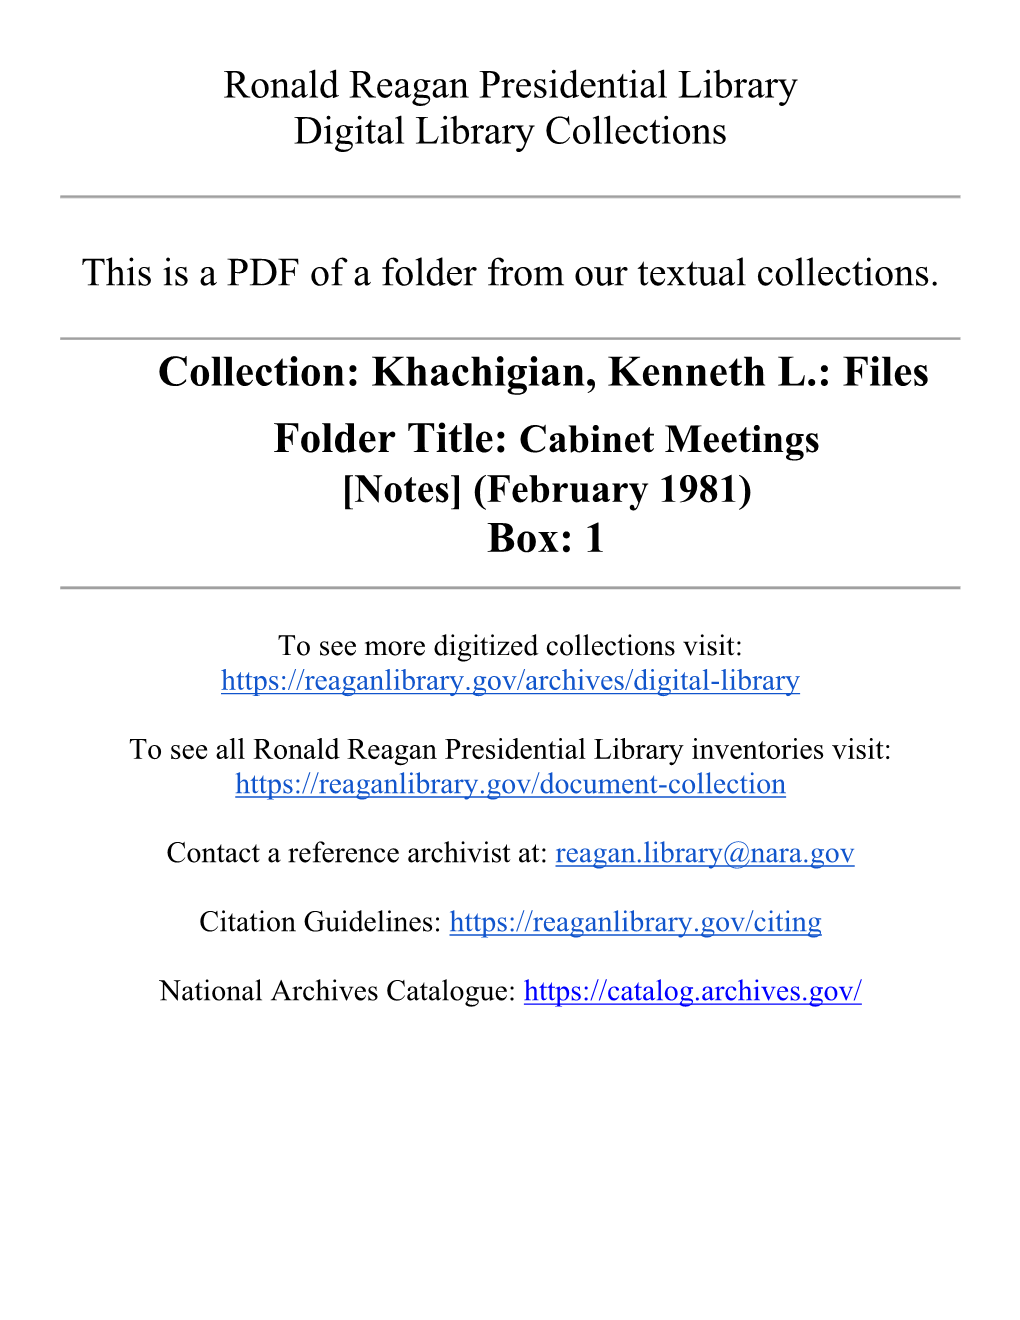 Khachigian, Kenneth L.: Files Folder Title: Cabinet Meetings [Notes] (February 1981) Box: 1